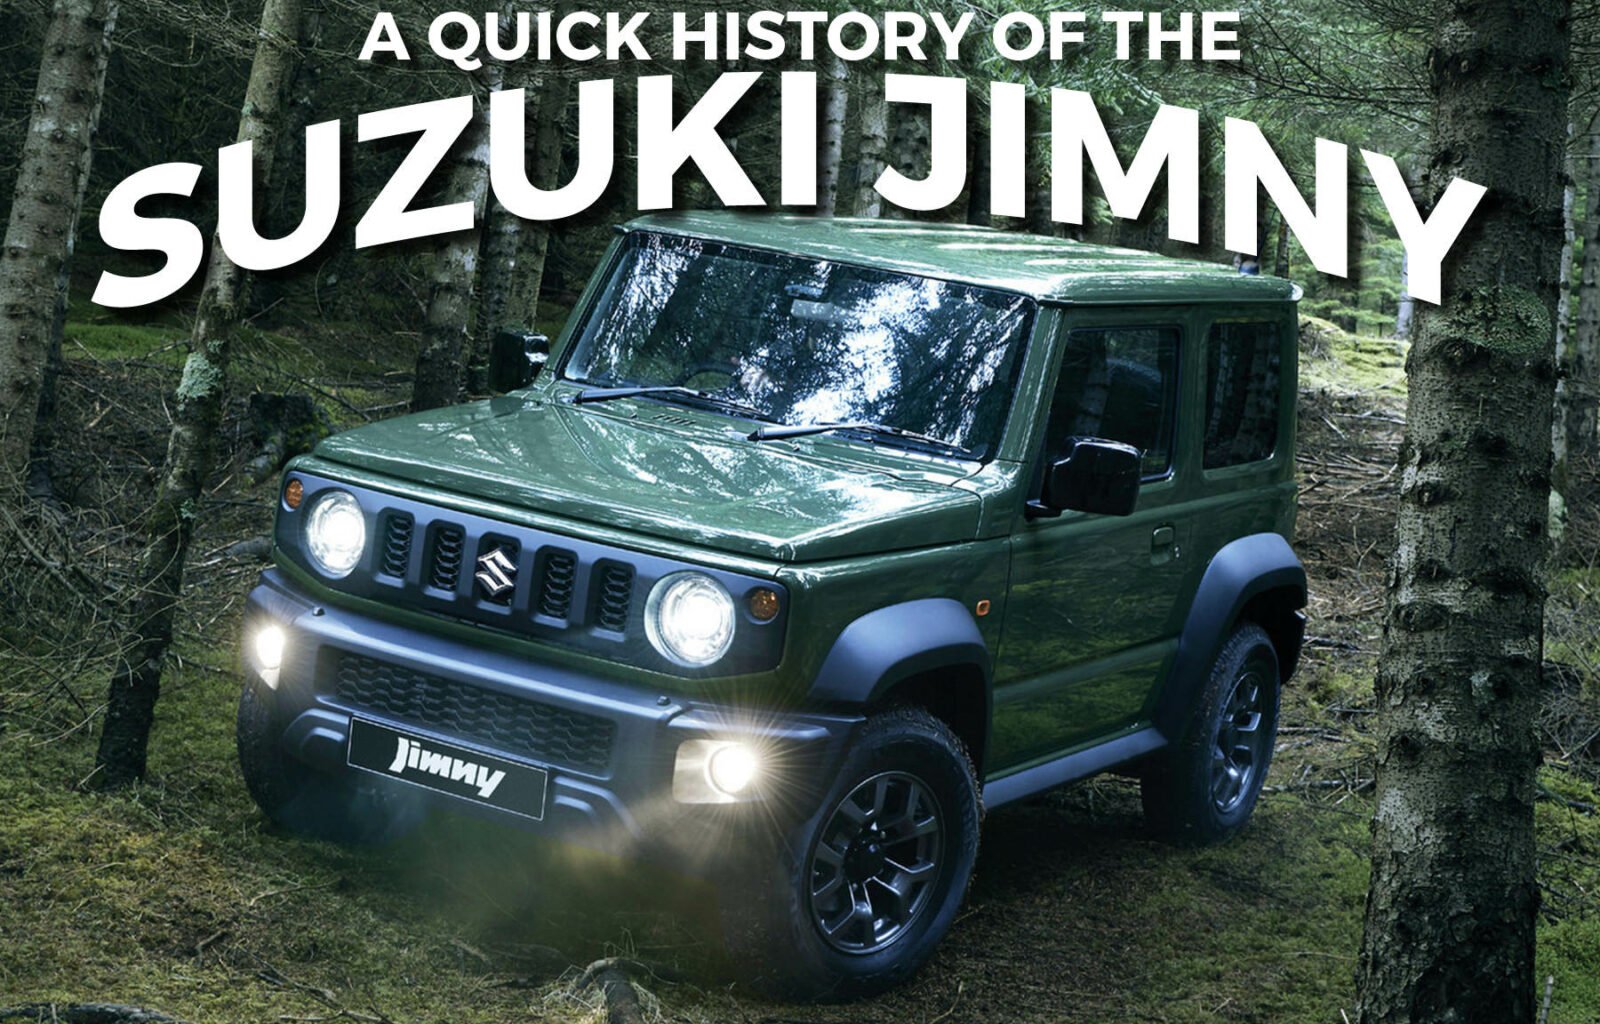 Suzuki-Jimny-Quick-History